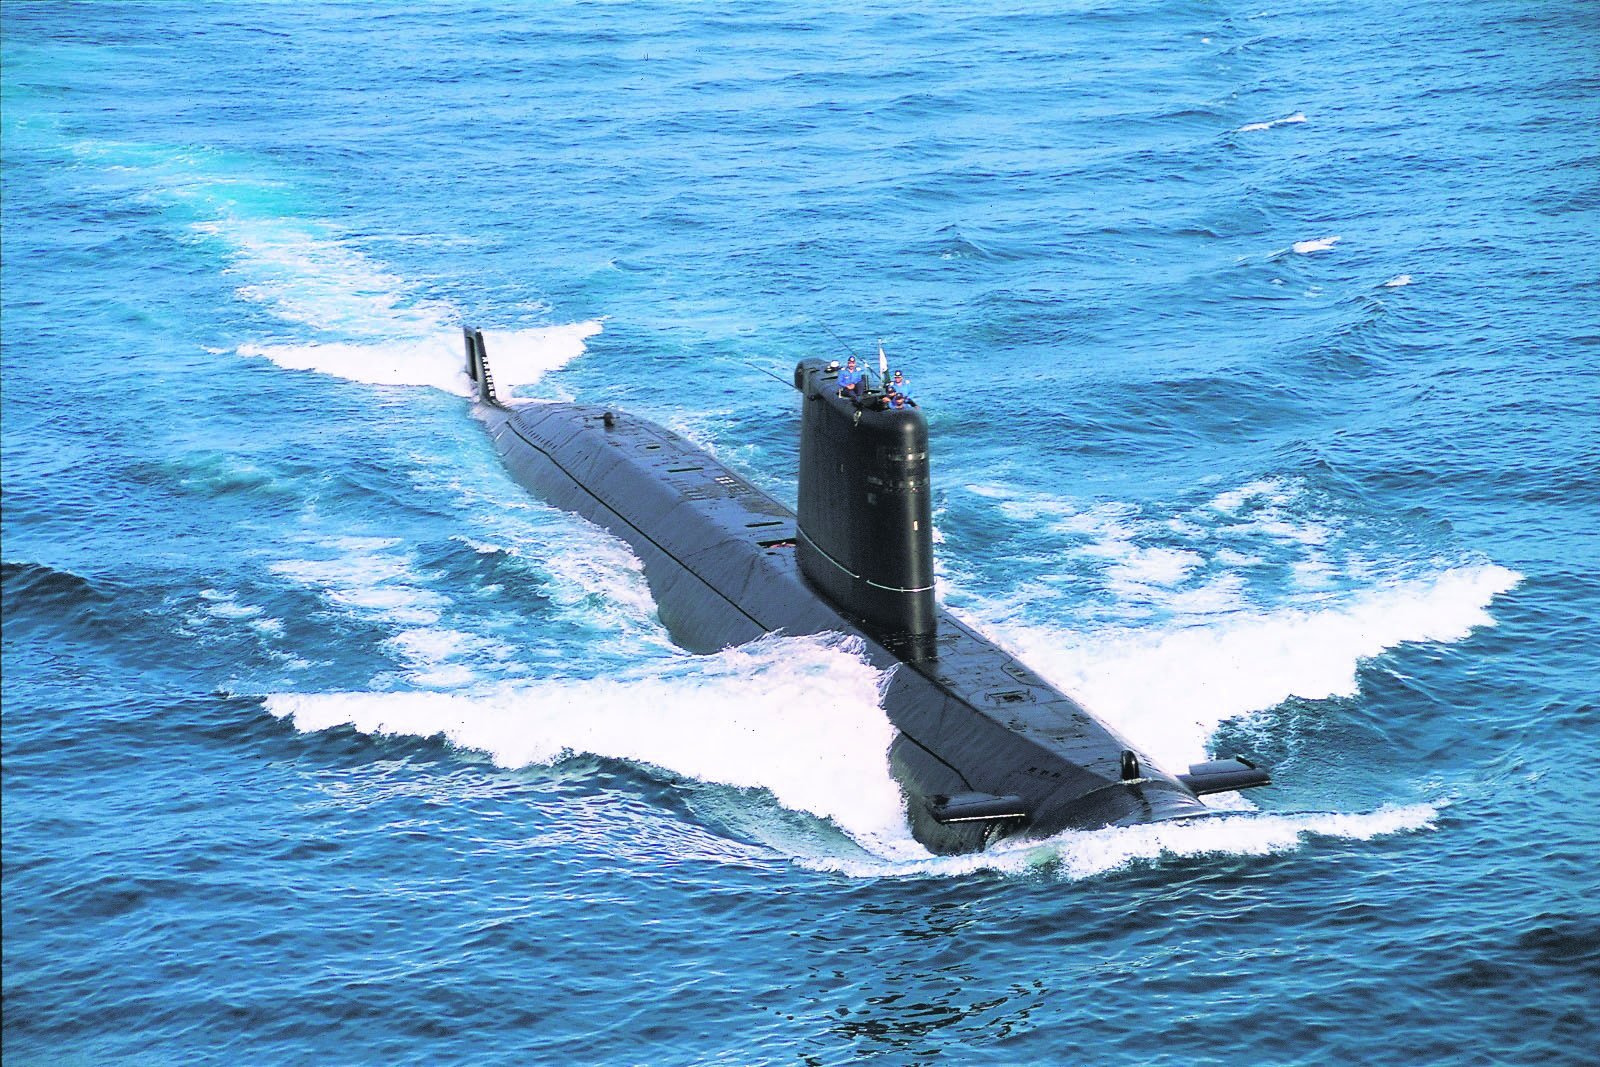 Agosta 90B submarine. (File Photo)